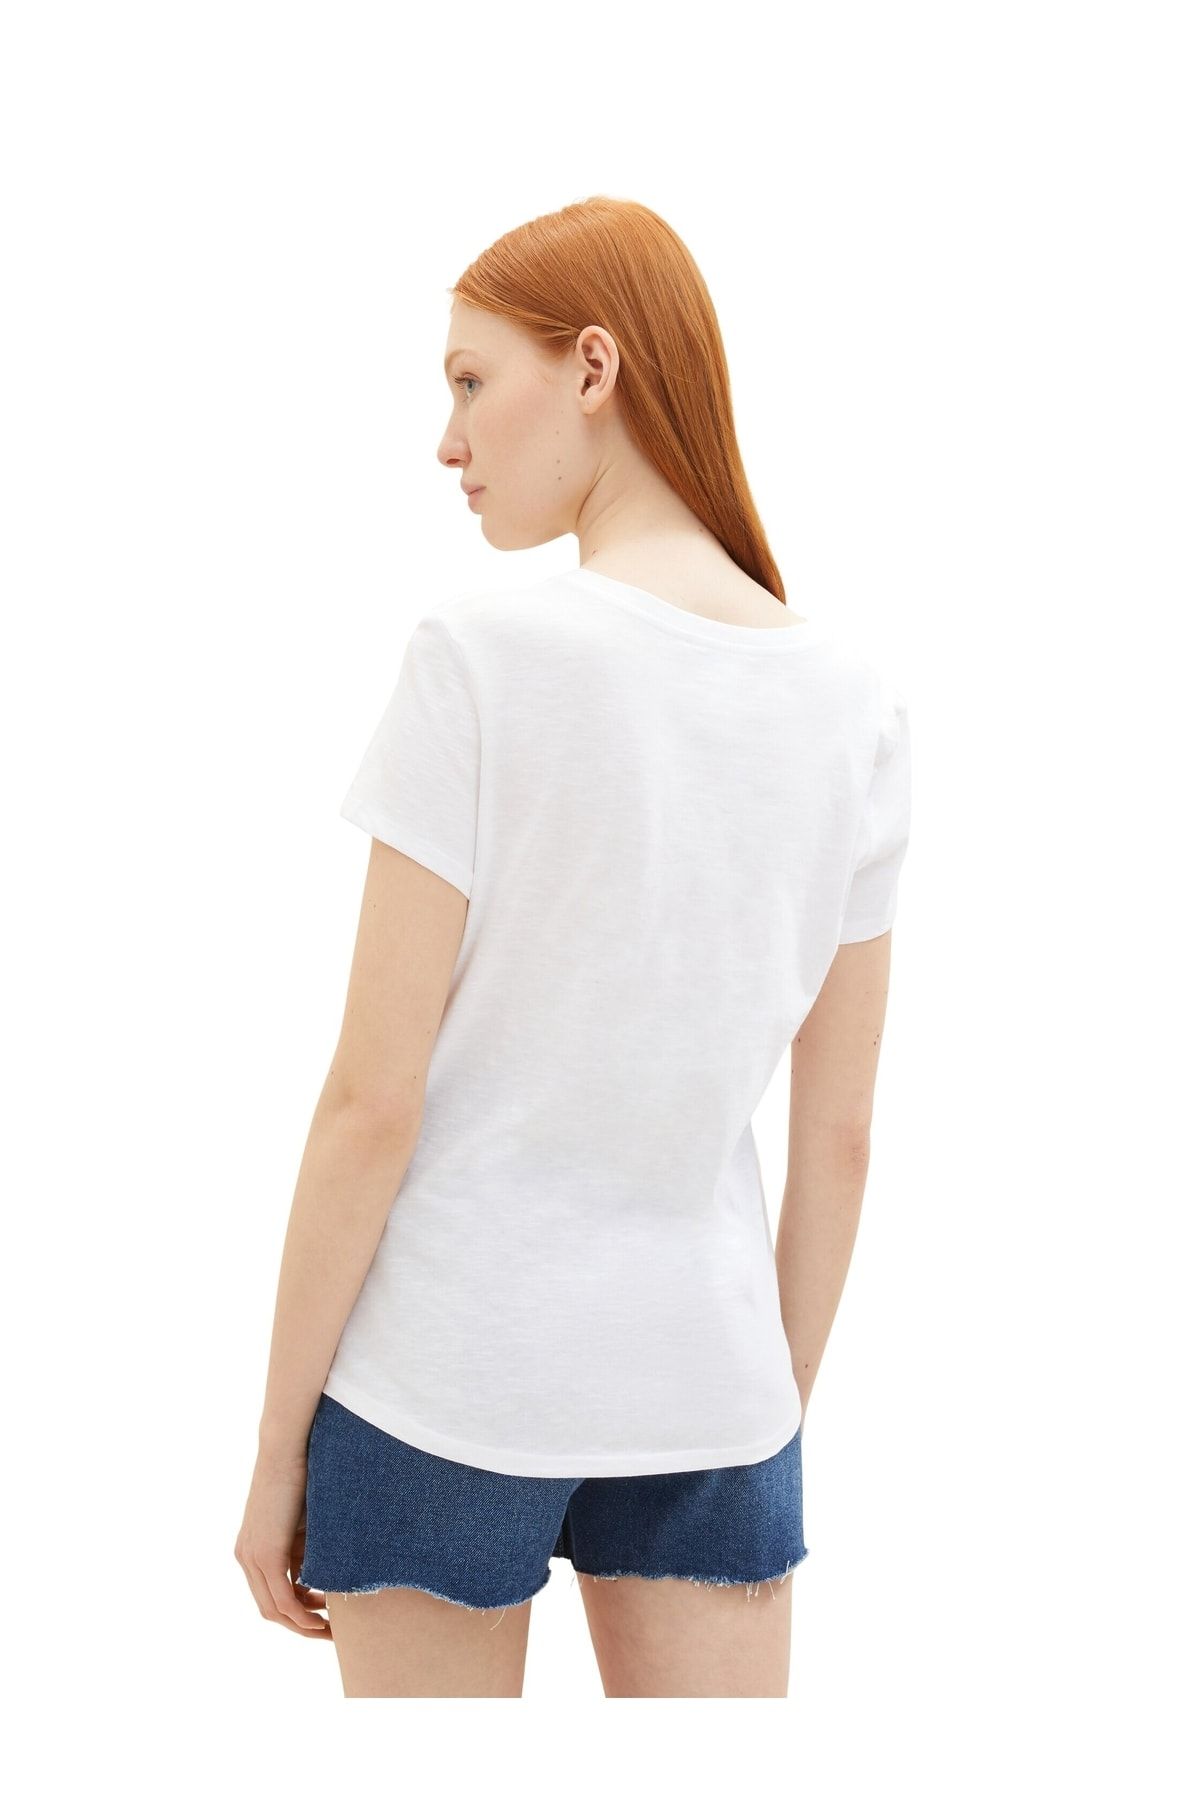 Tom Tailor Denim T-Shirt - White - Regular fit - Trendyol | T-Shirts